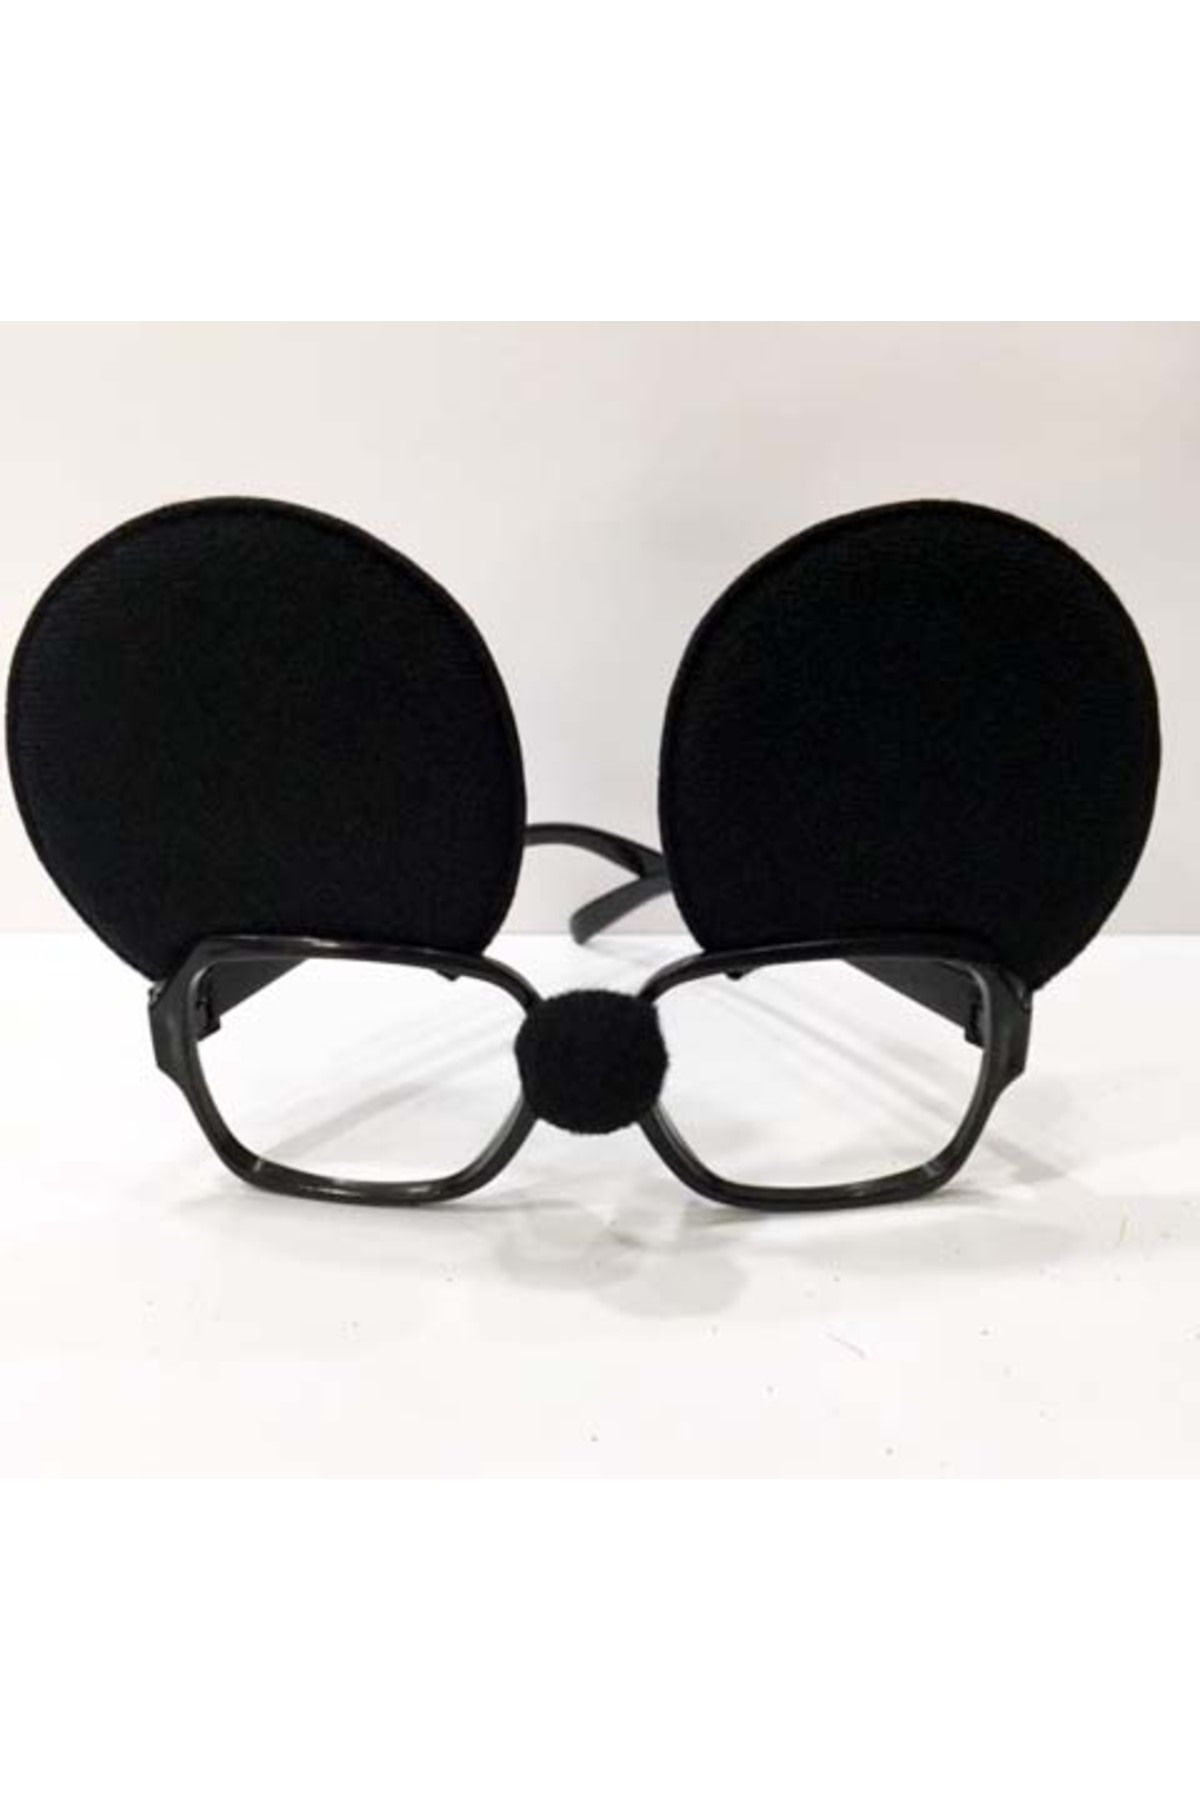 CEKAVE Mickey Mouse Gözlüğü (4202)